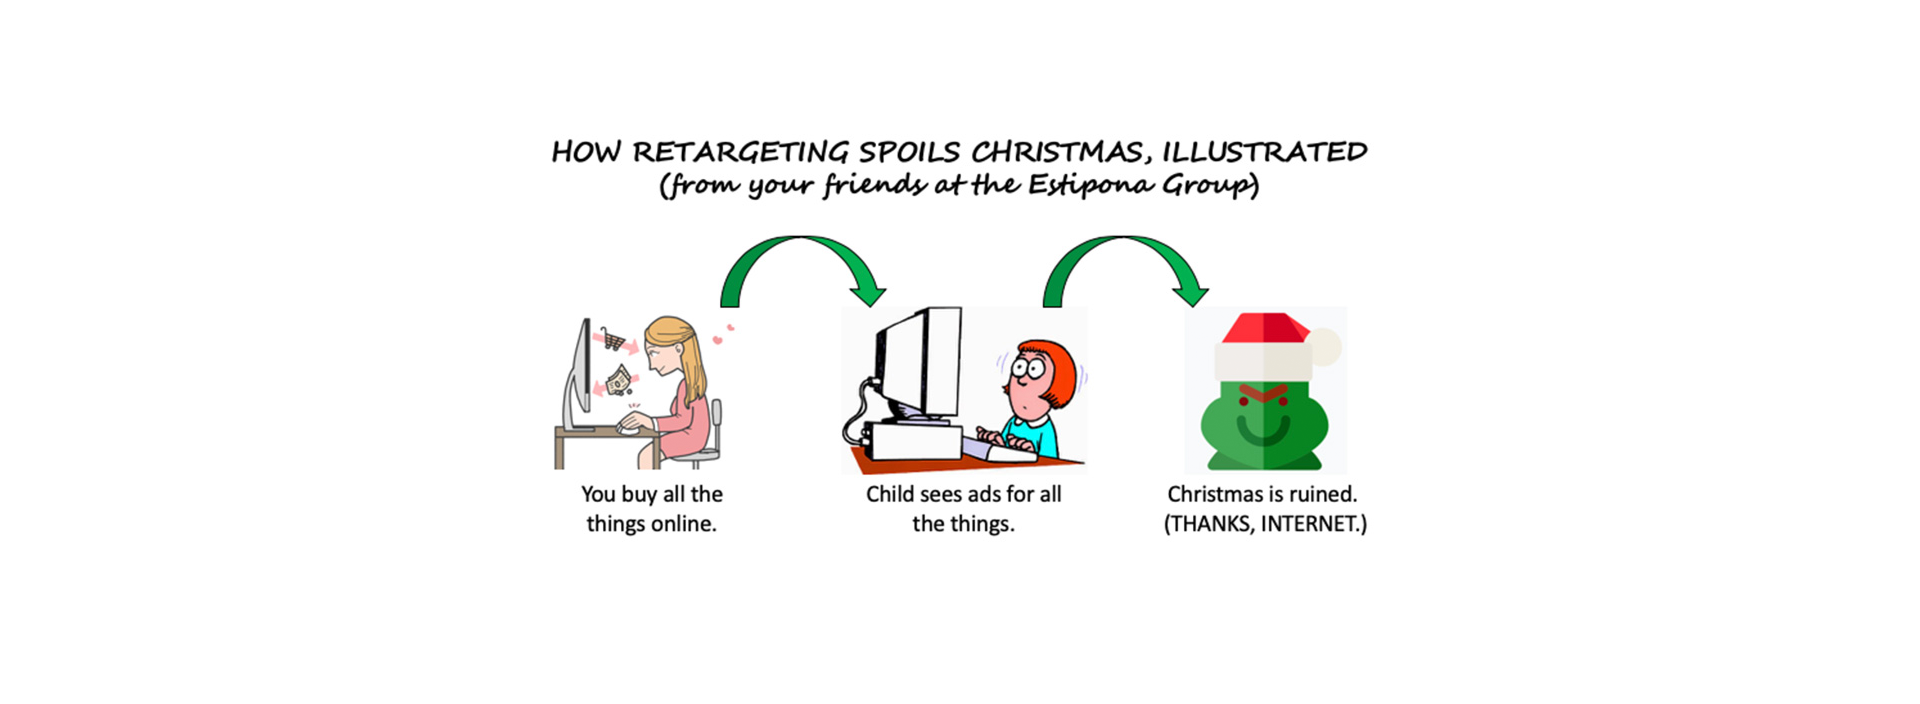 how digital retargeting spoils the holidays, illustrated